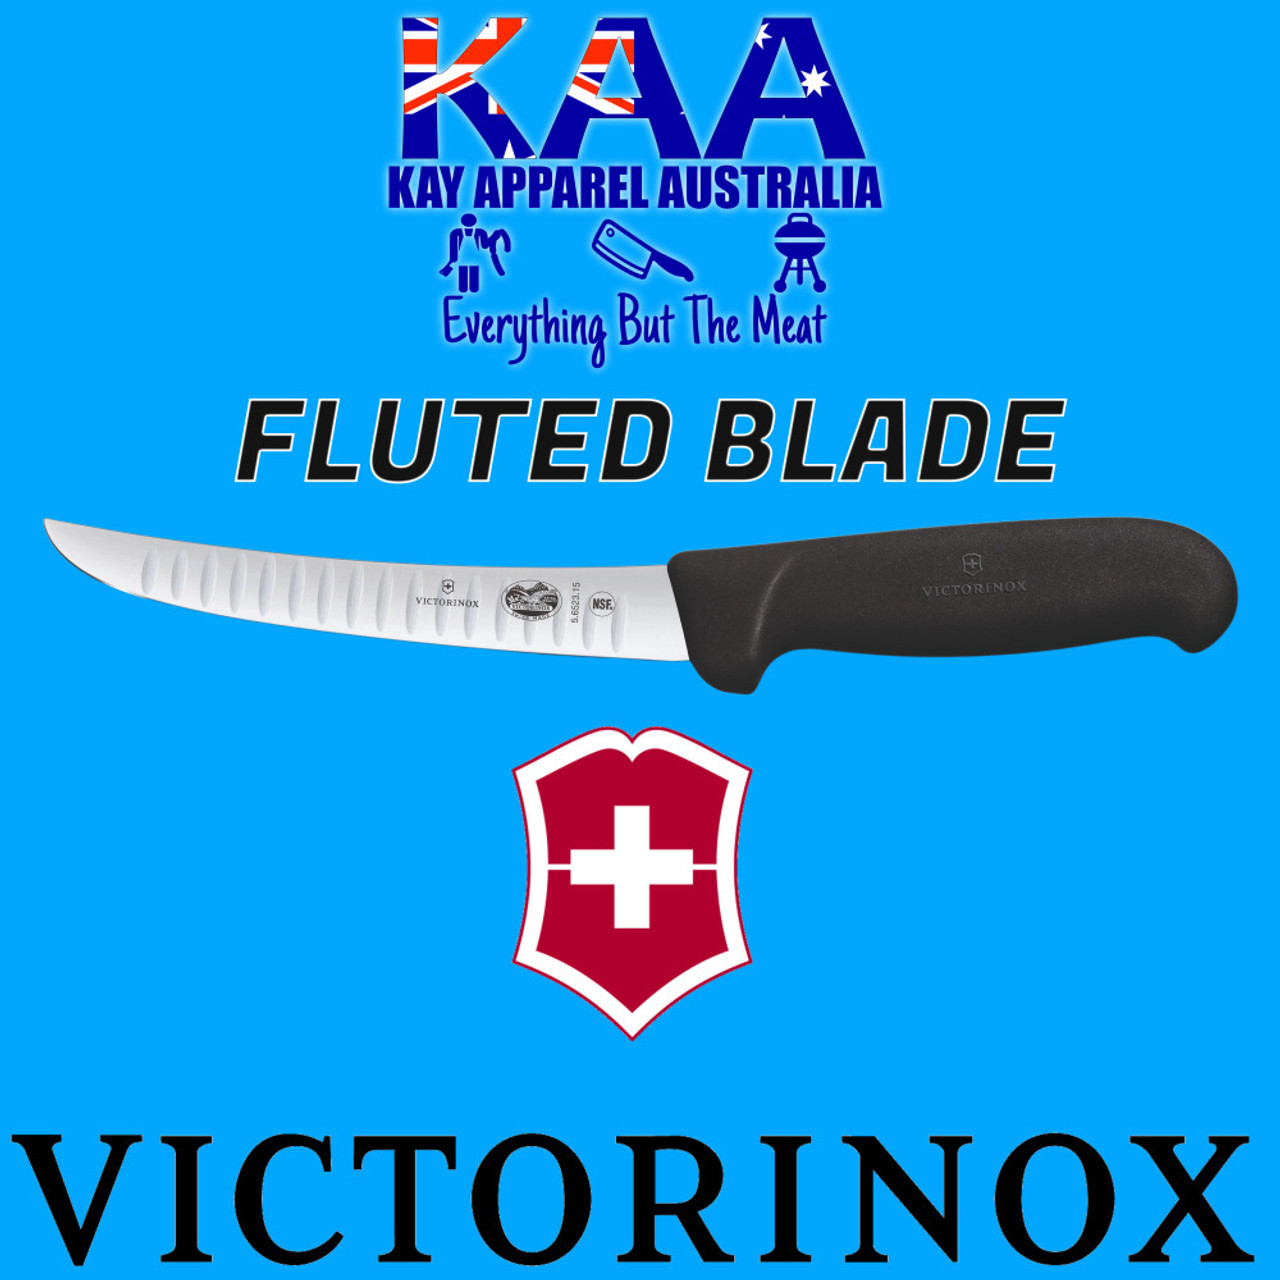 Victorinox Fibrox boning knife 15 cm, 5.6503.15